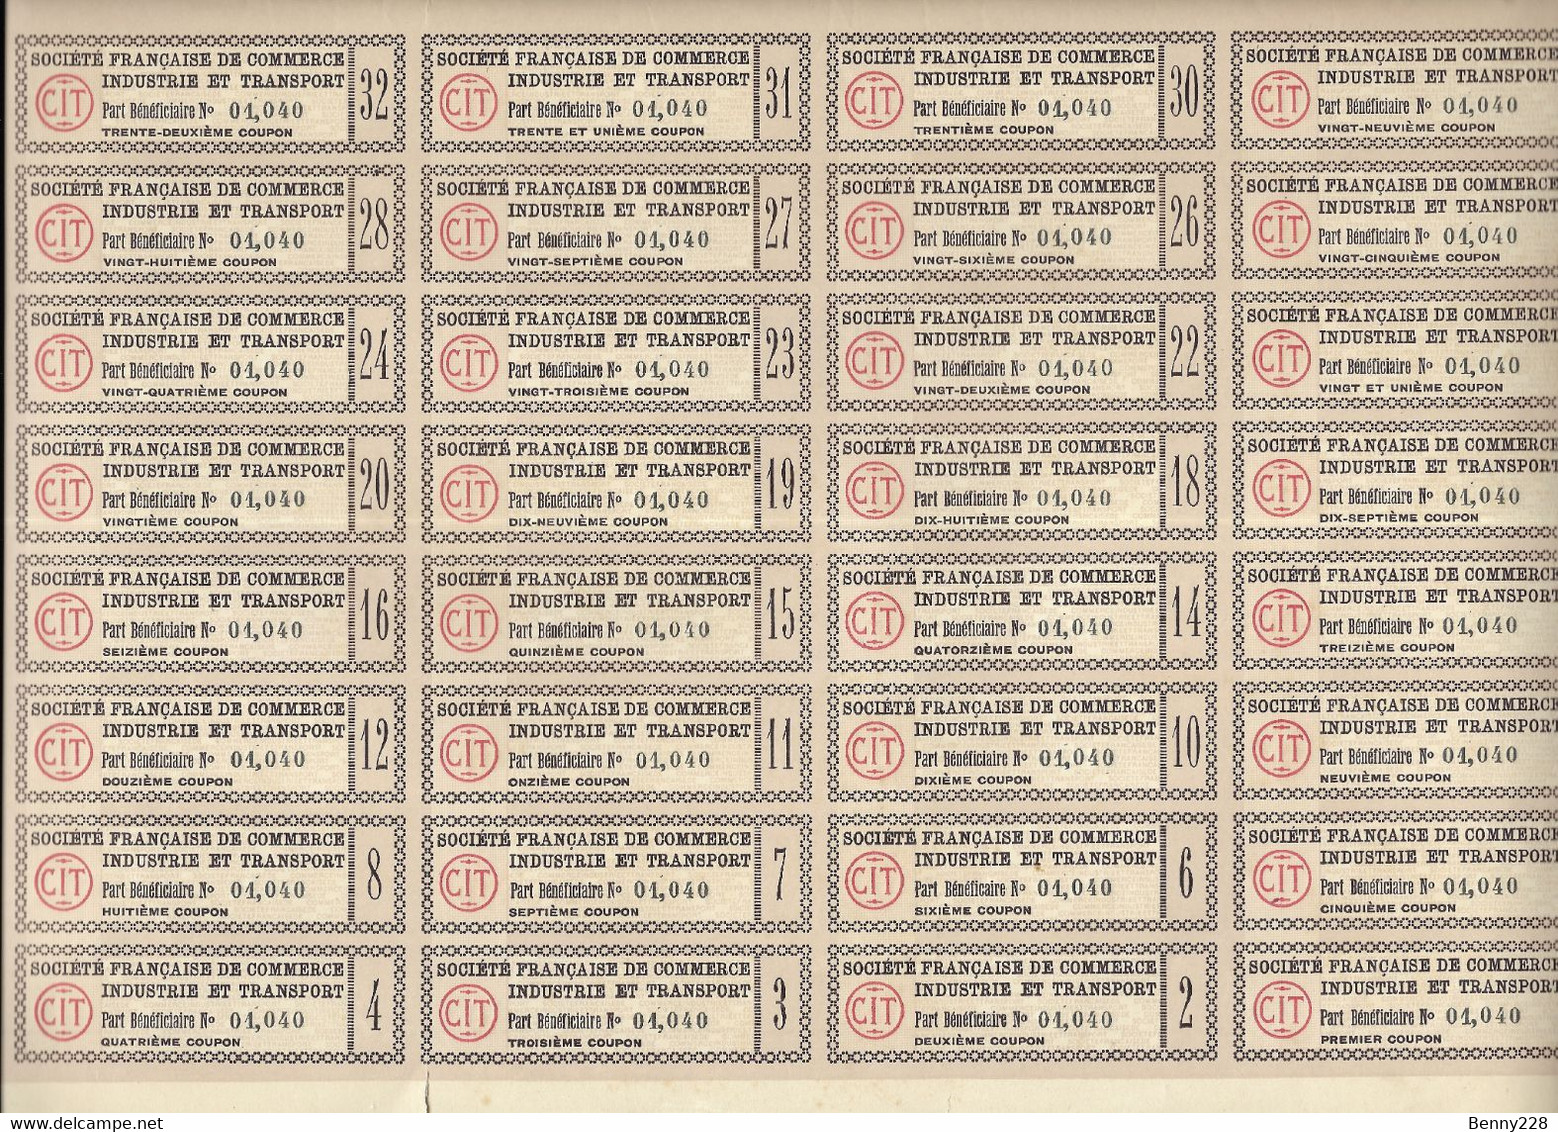 SOCIETE FRANCAISE DE COMMERCE INDUSTRIE & TRANSPORT - 1928 - Transporte